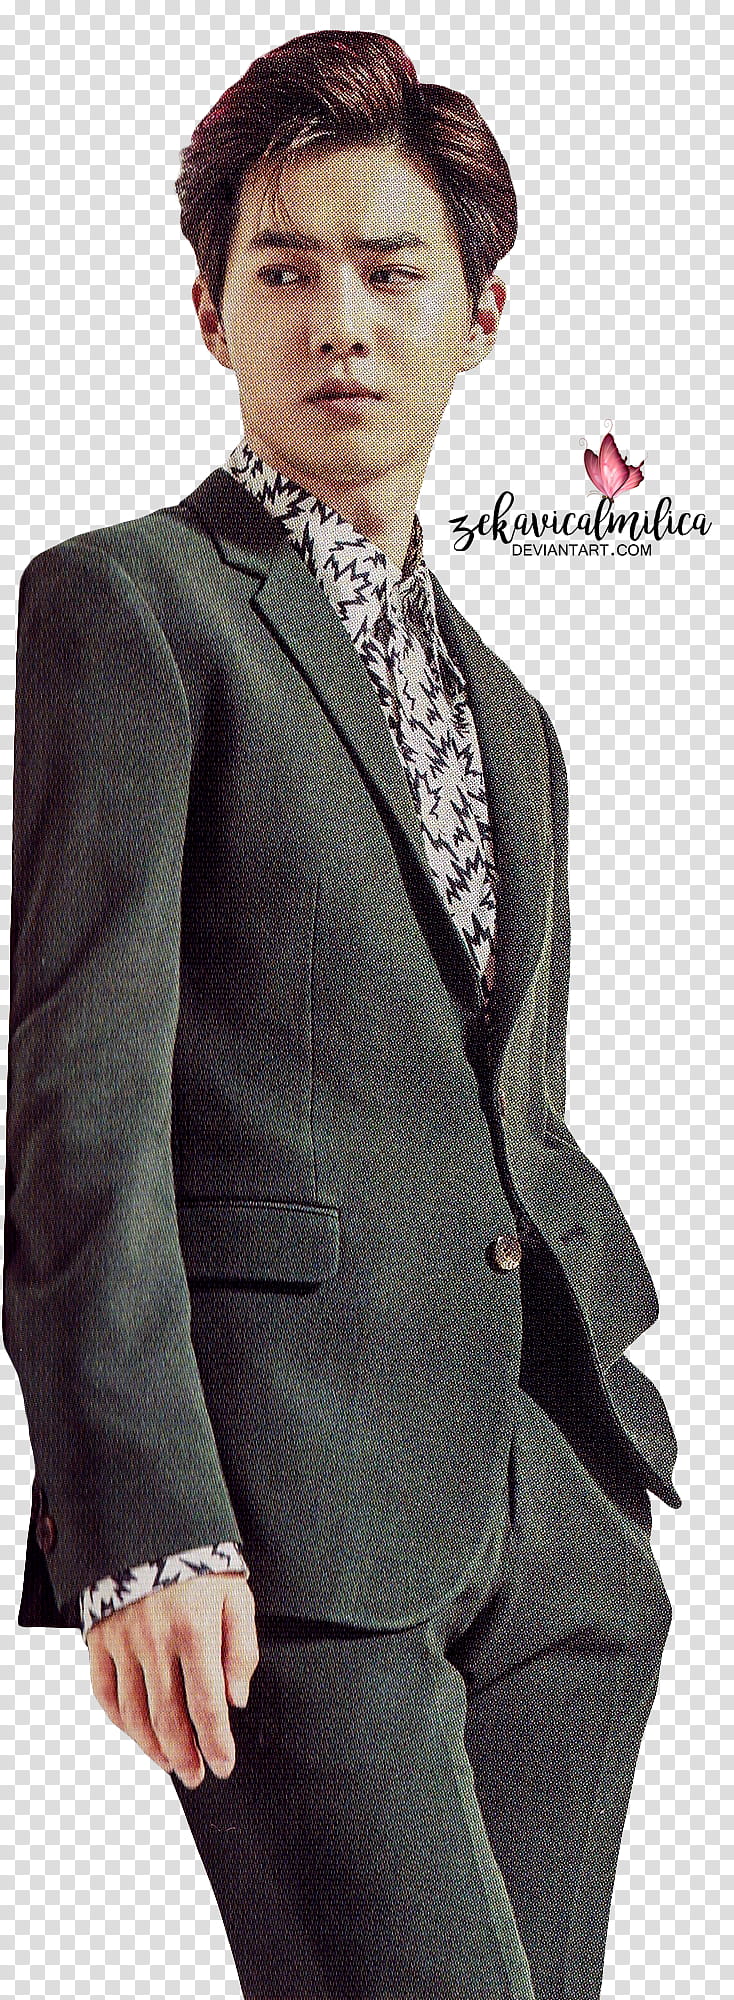 EXO Suho Countdown, men's black suit jacket transparent background PNG clipart